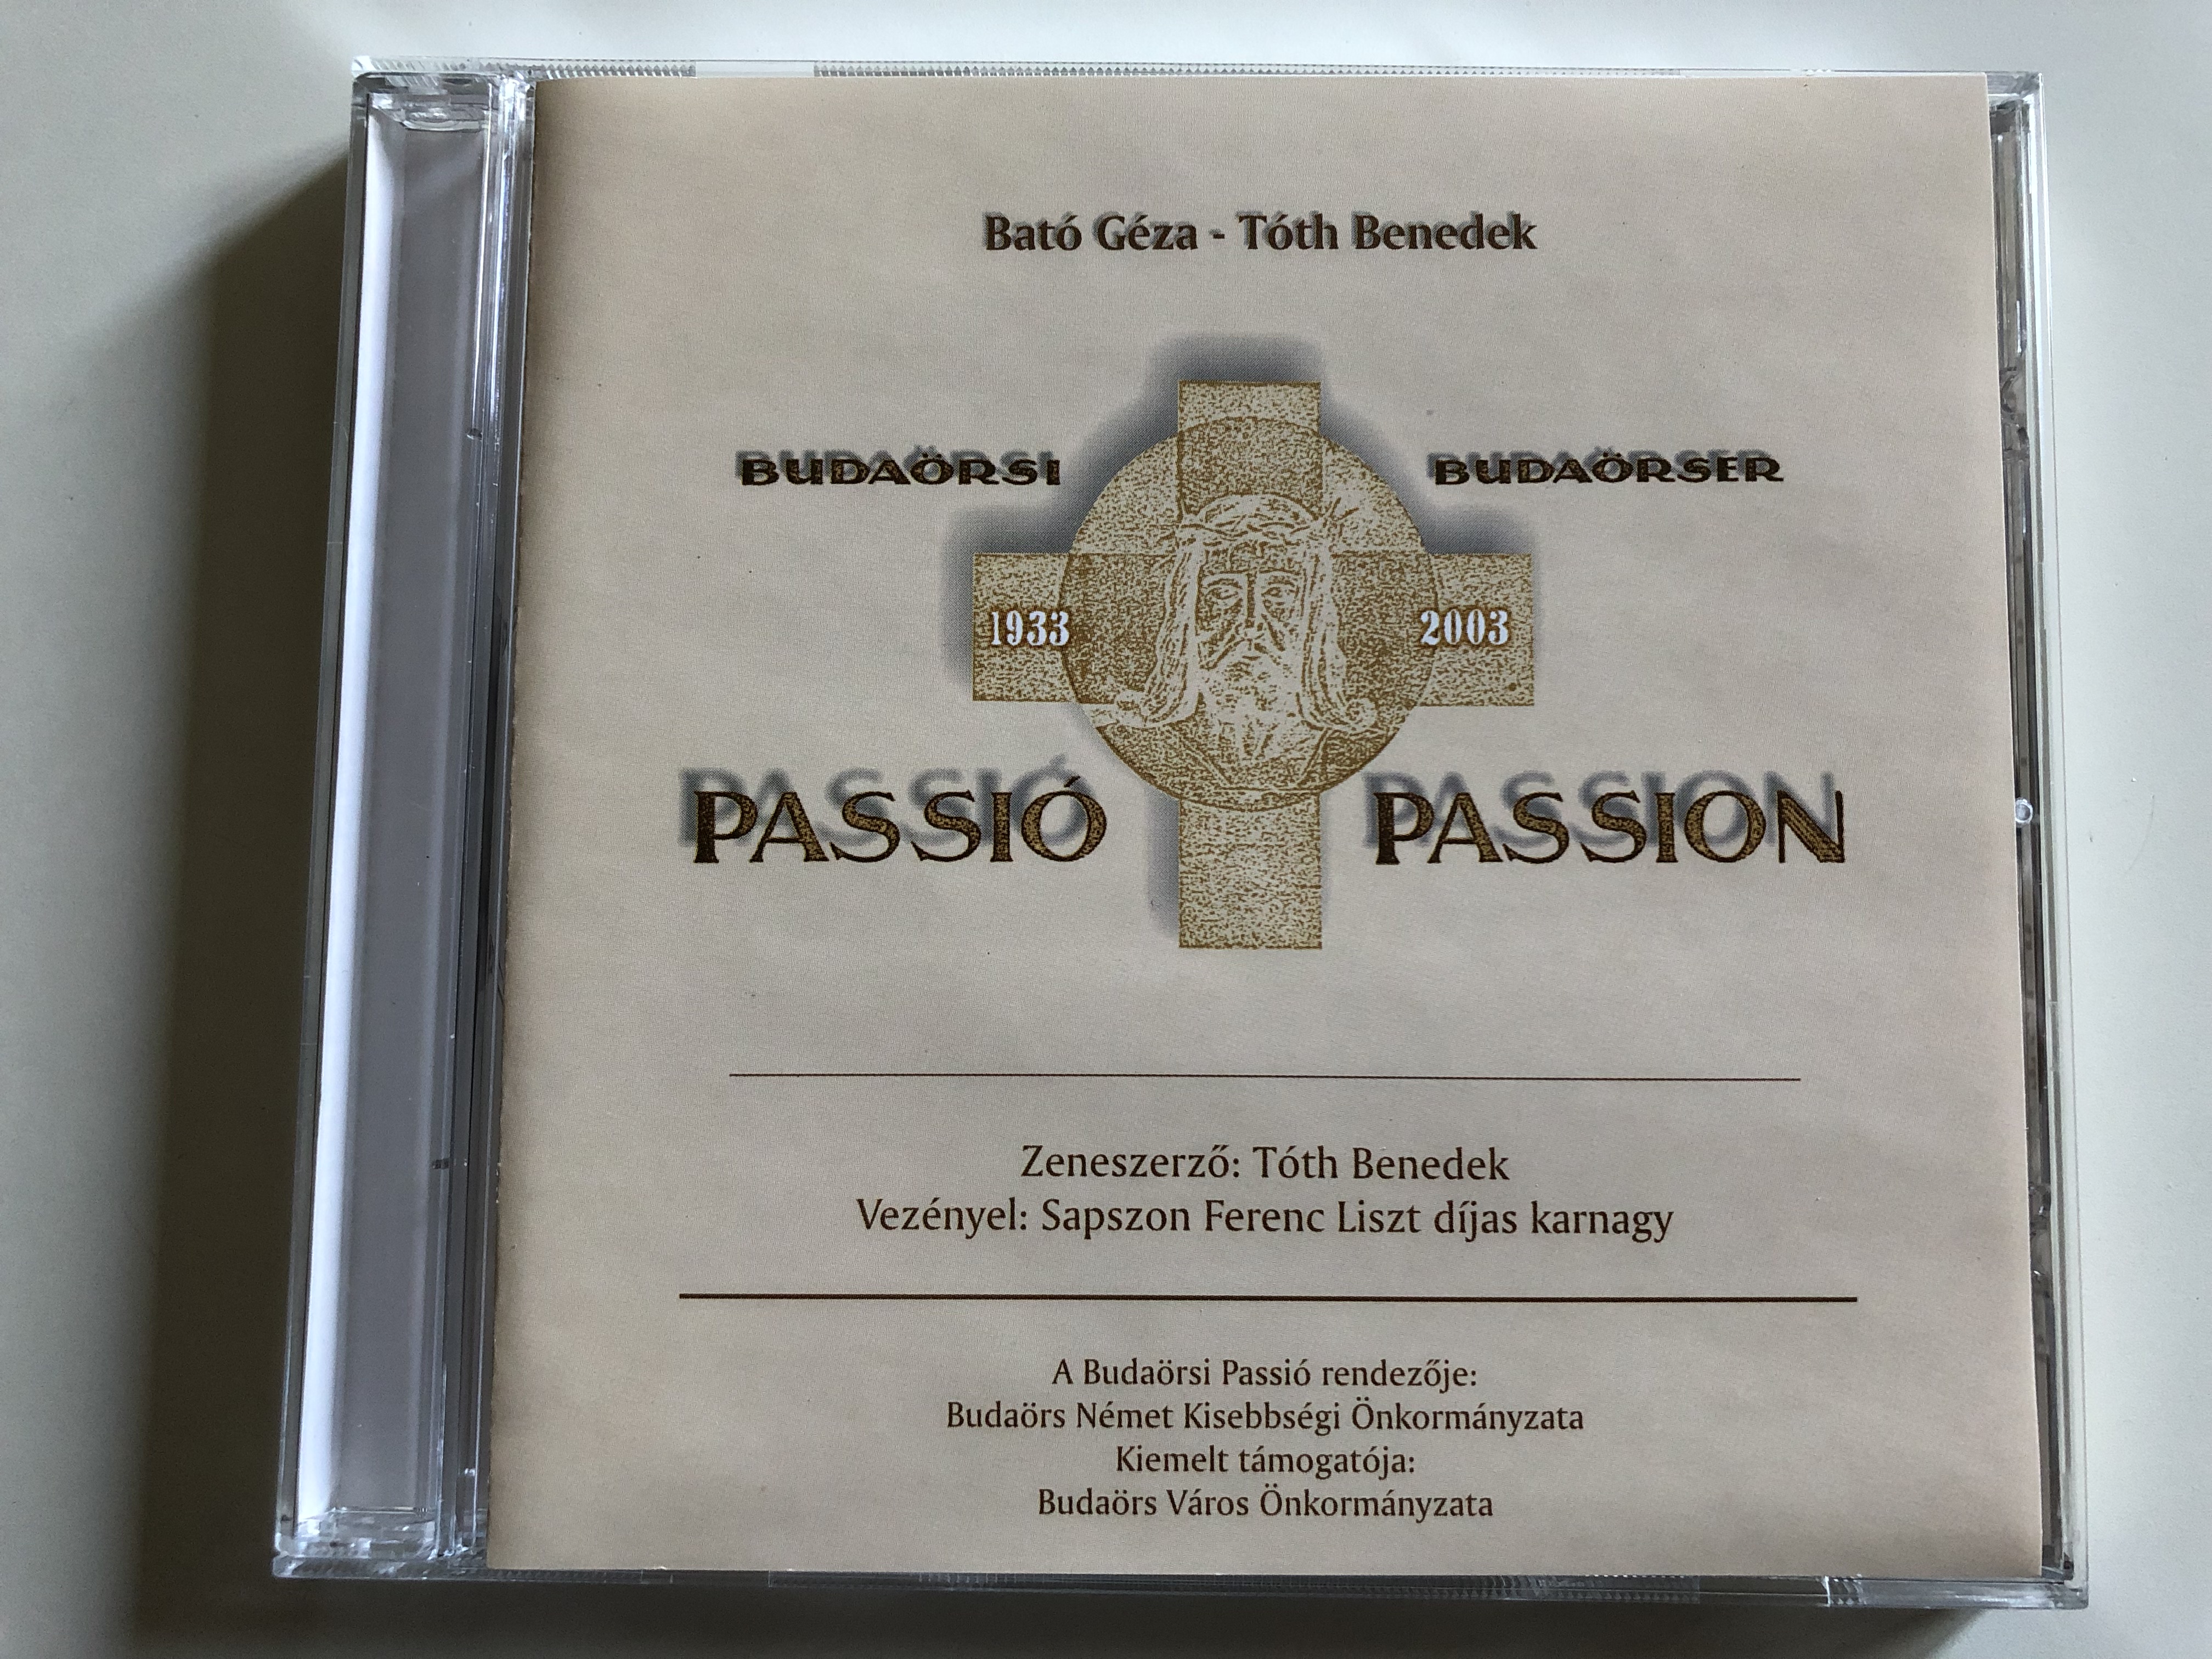 bato-geza-toth-benedek-budaorsi-budaorser-passio-passion-conducted-toth-benedek-szerzoi-kiadas-audio-cd-p-001-1-.jpg